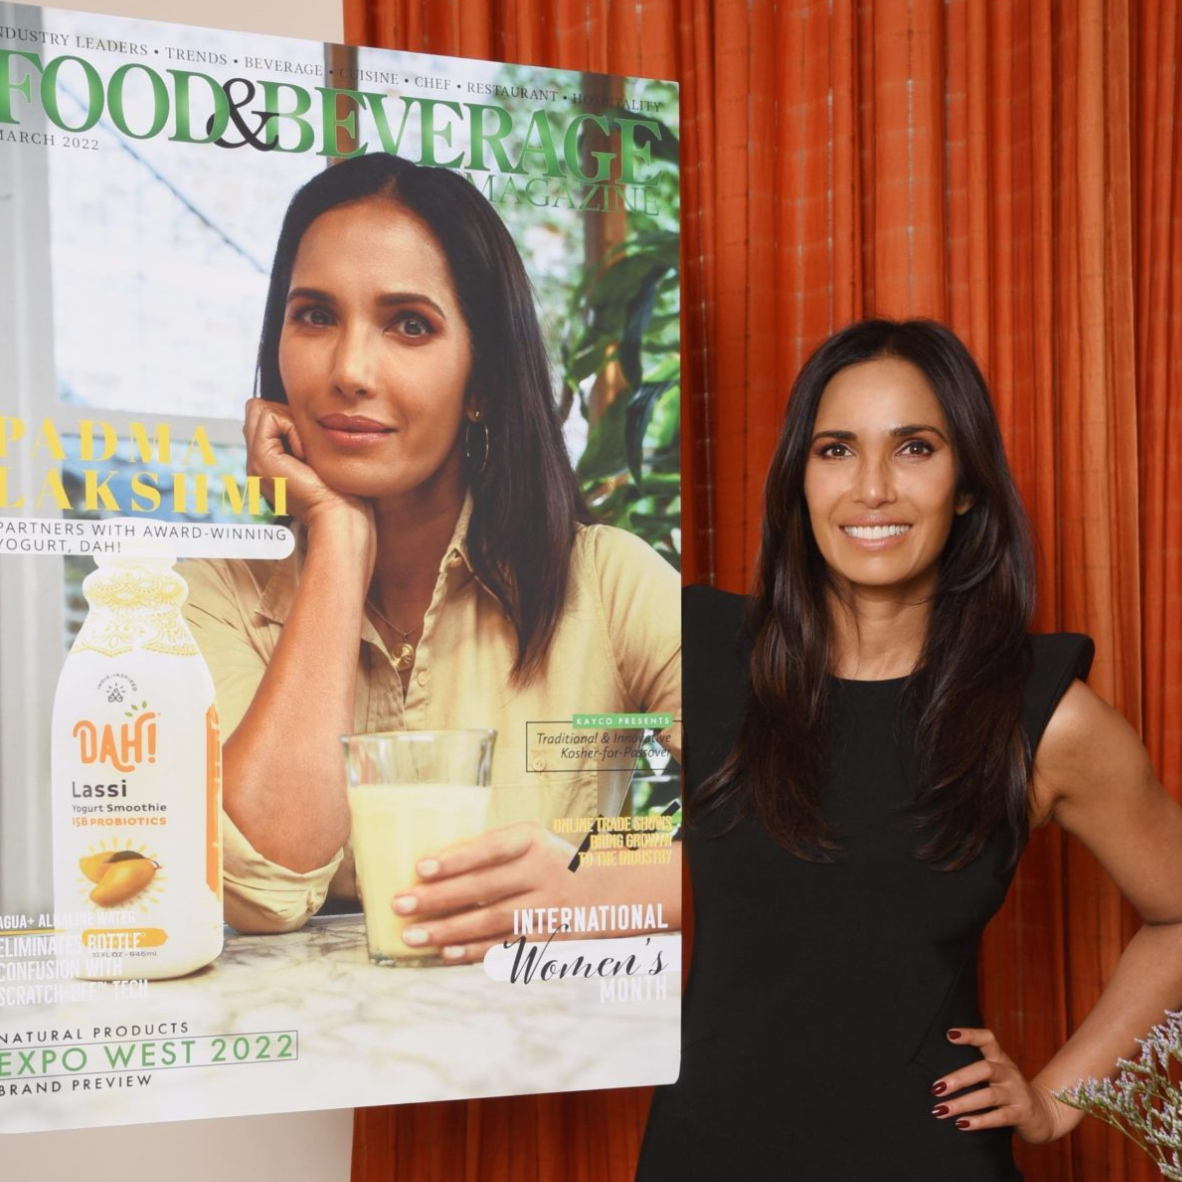 Food & Beverage Magazine: Padma Lakshmi Celebrates her March 2022 Cover of Food & Beverage Magazine and DAH! yogurt partnership at a private event in New York City